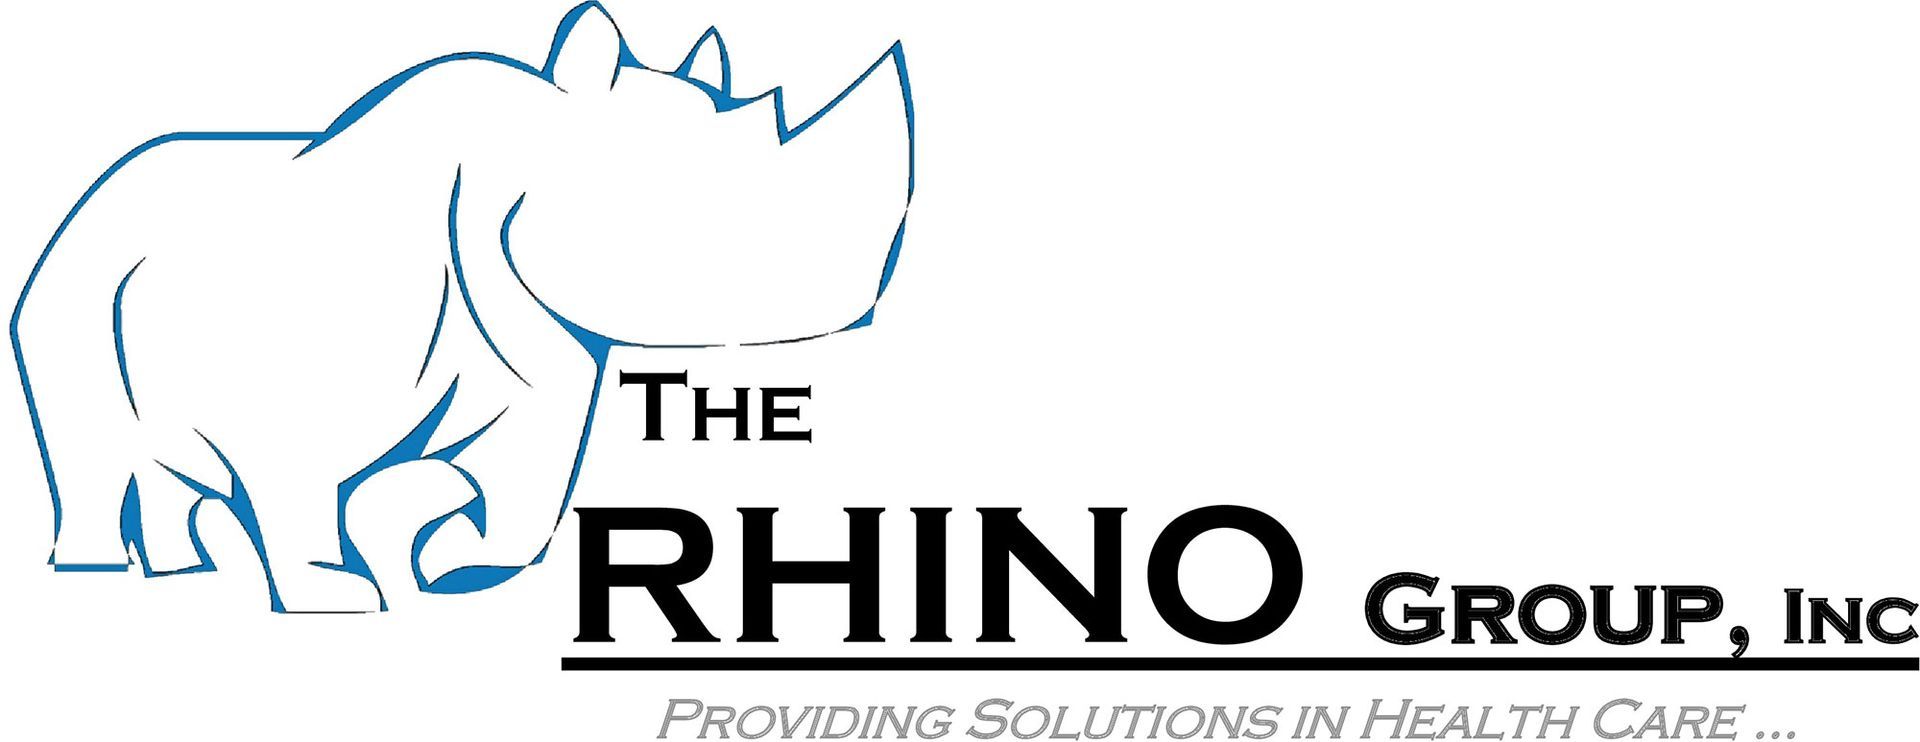 The Rhino Group, Inc - logo